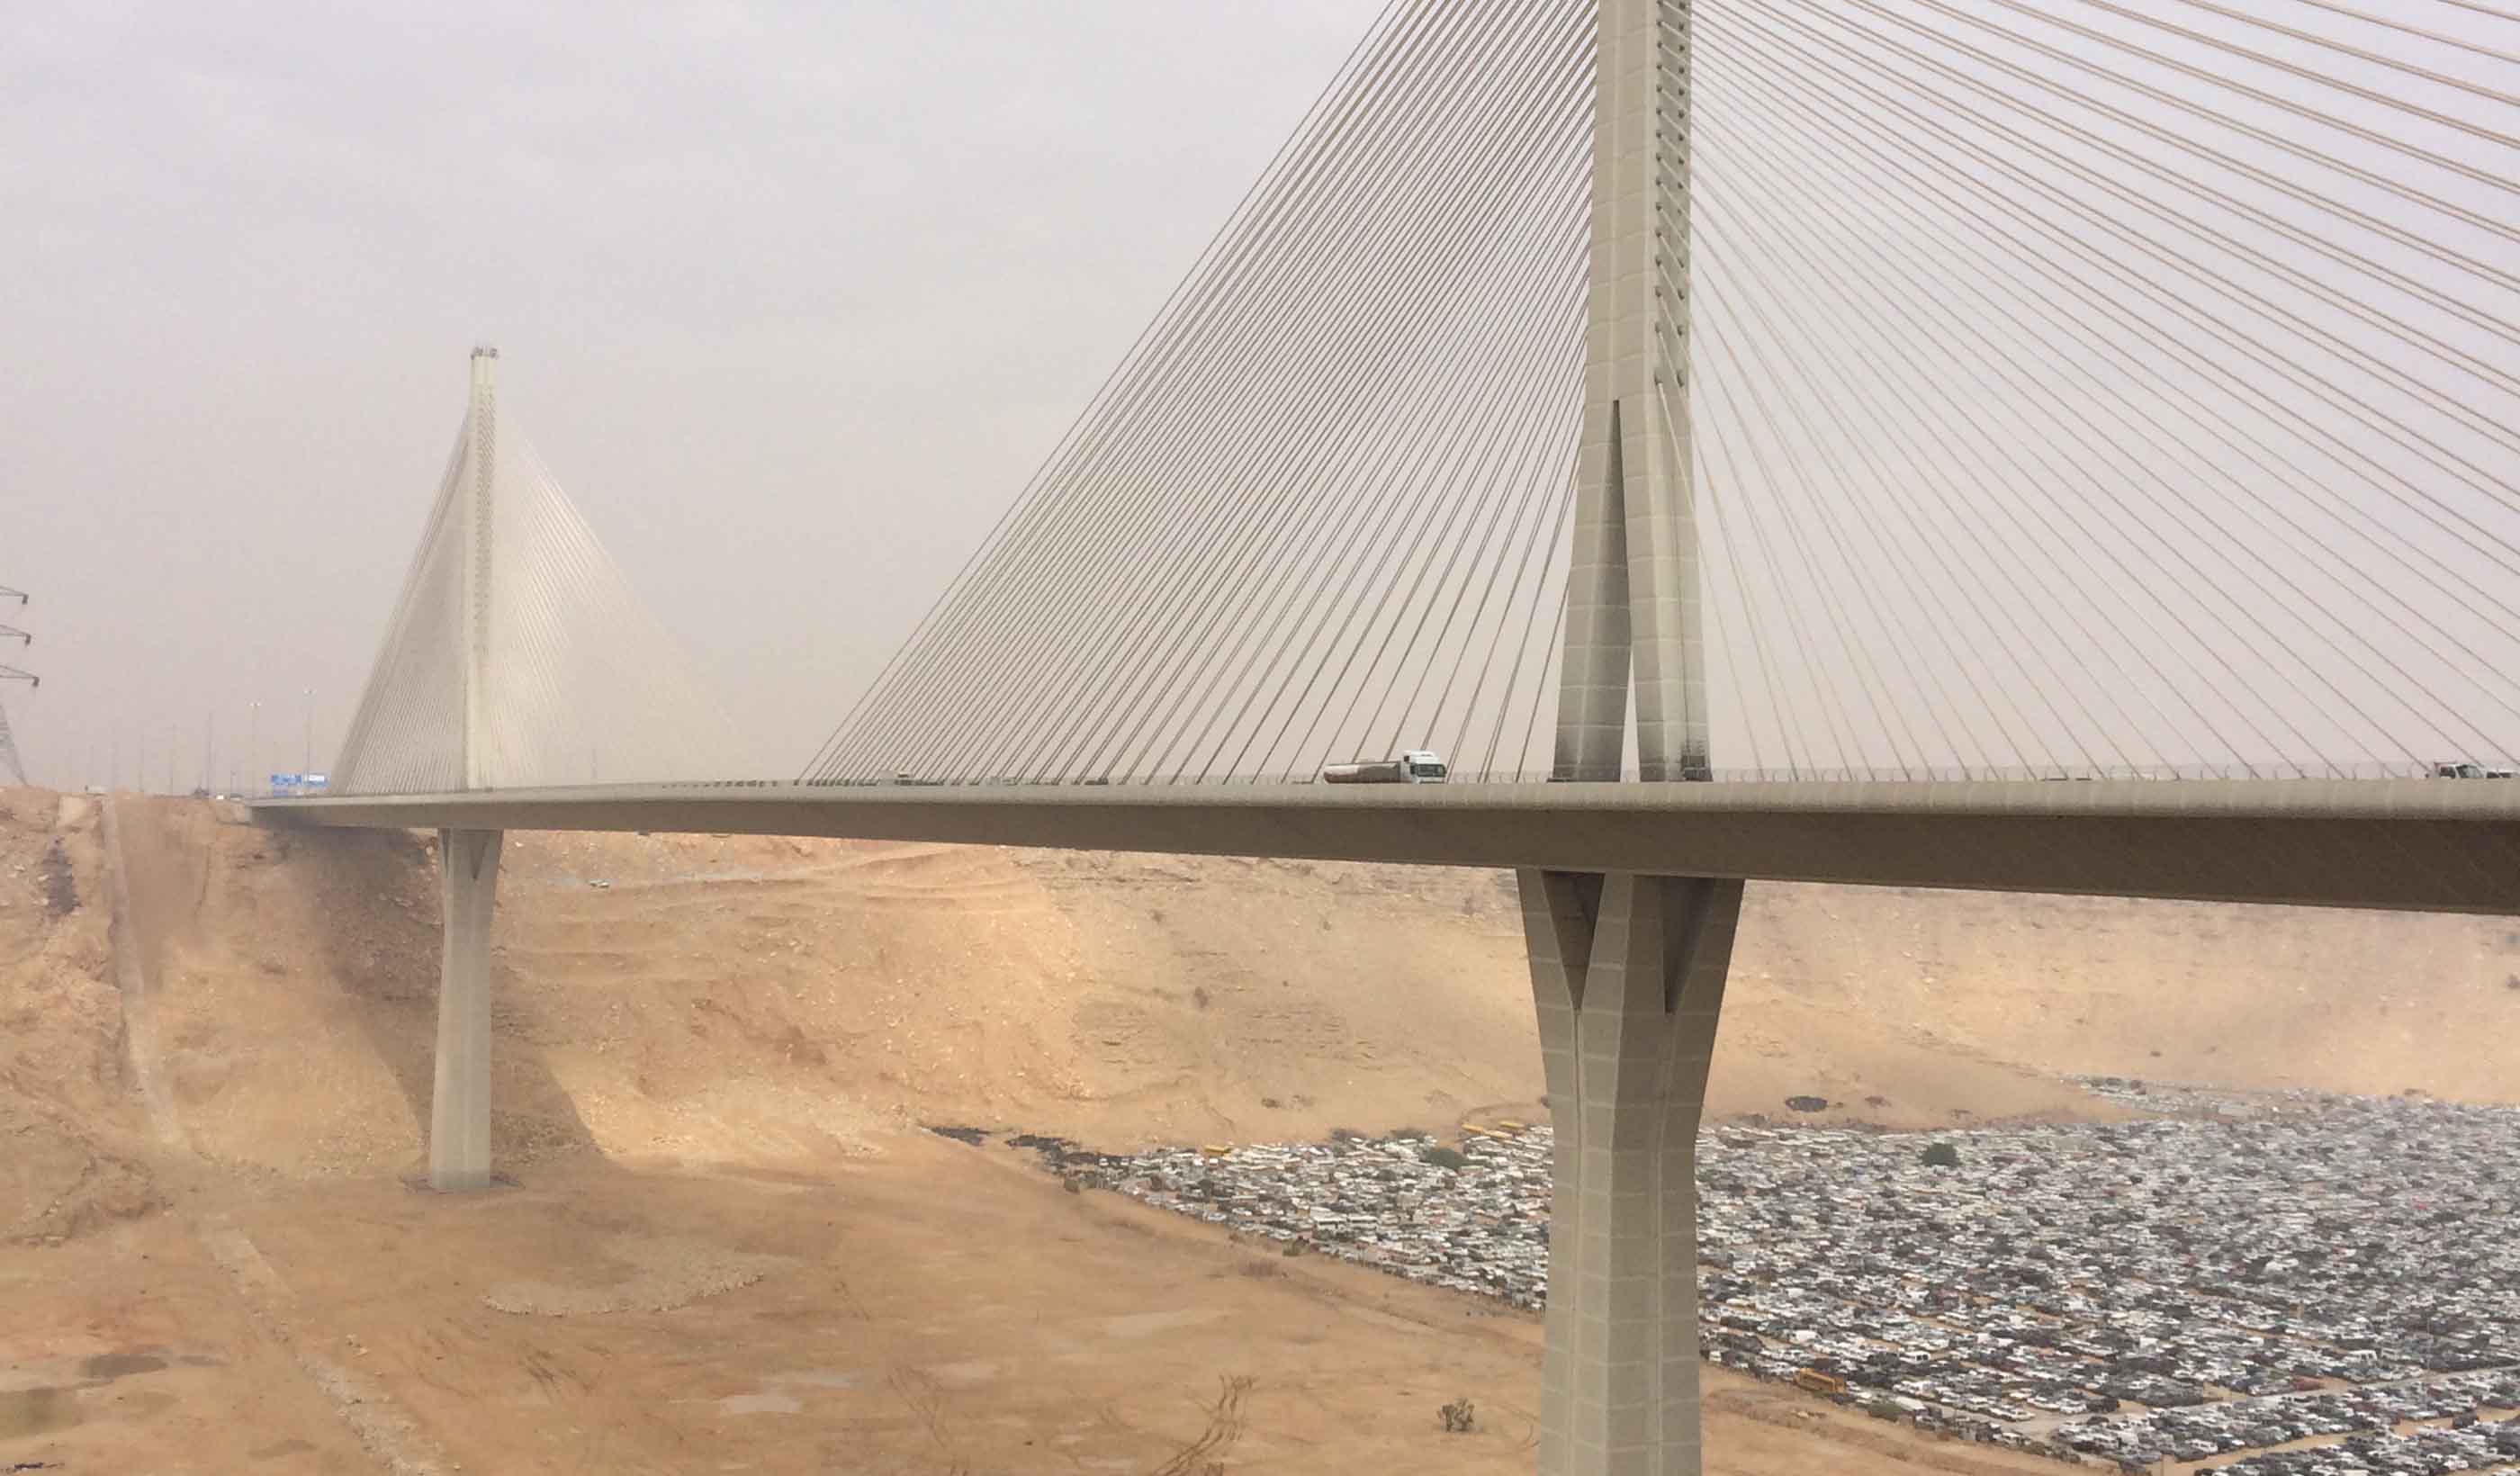 Saudi Arabia Bridge Inspection and Bridge Management